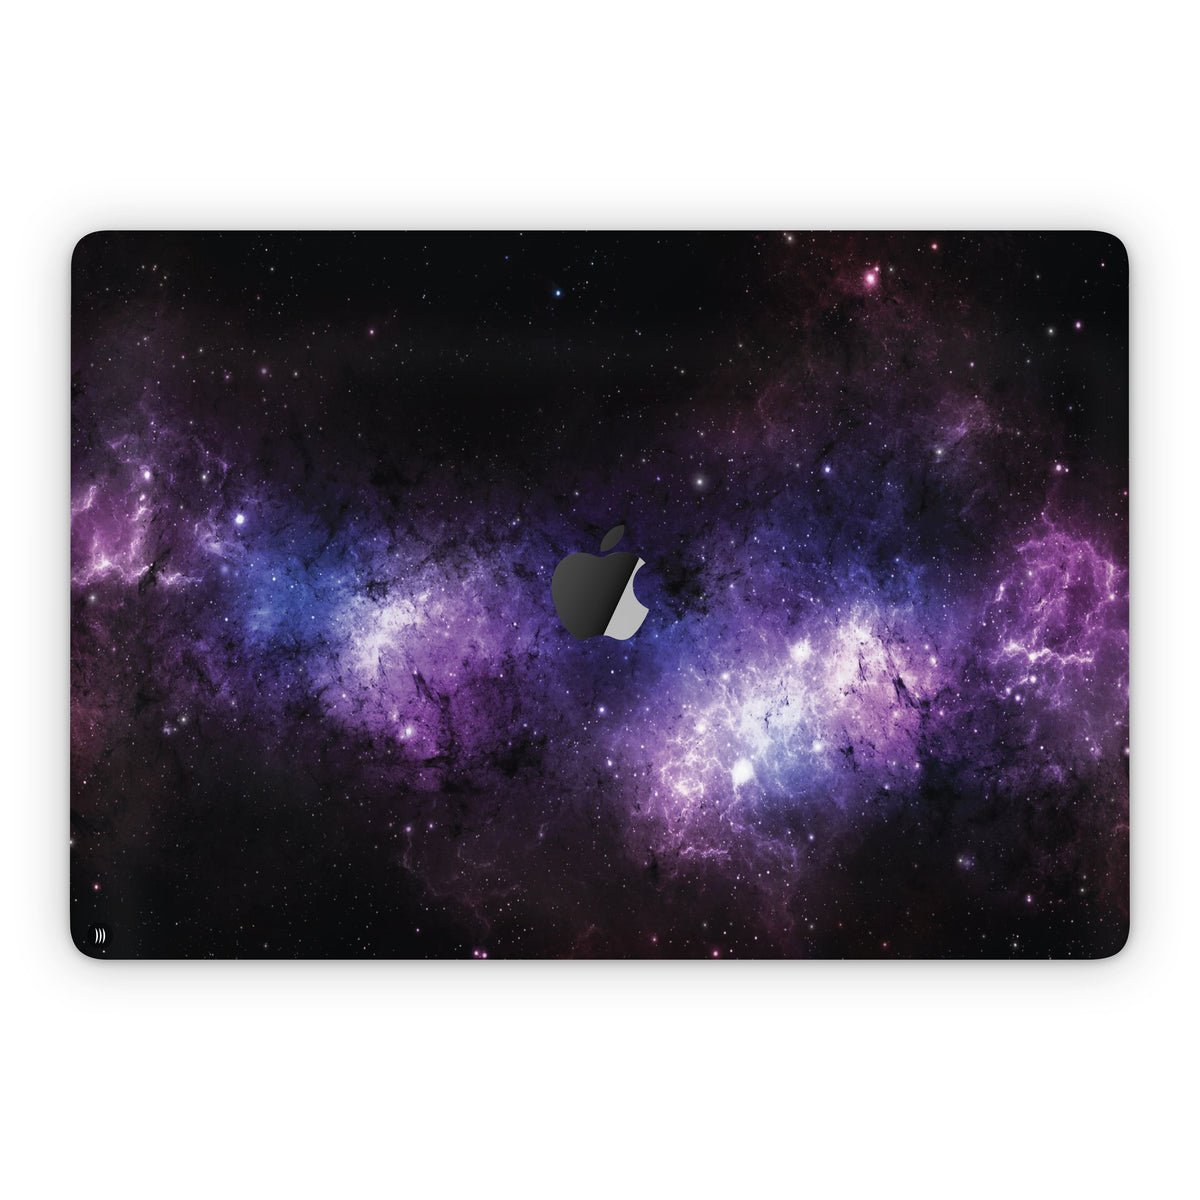 Galaxy (MacBook Skin)